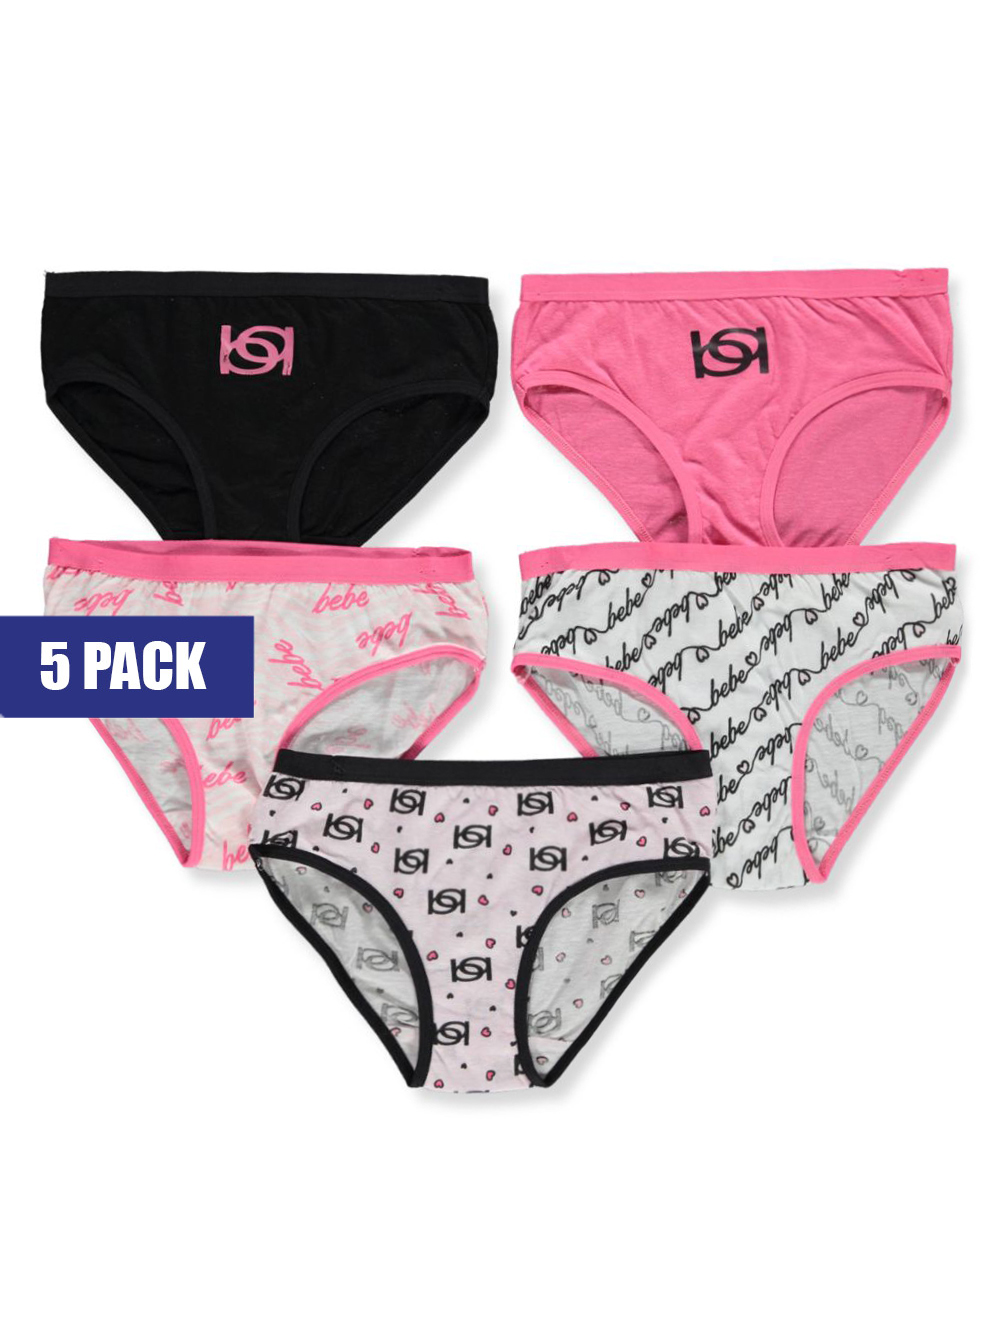 Simply Adorable Girls' 10-Pack Bikini Underwear